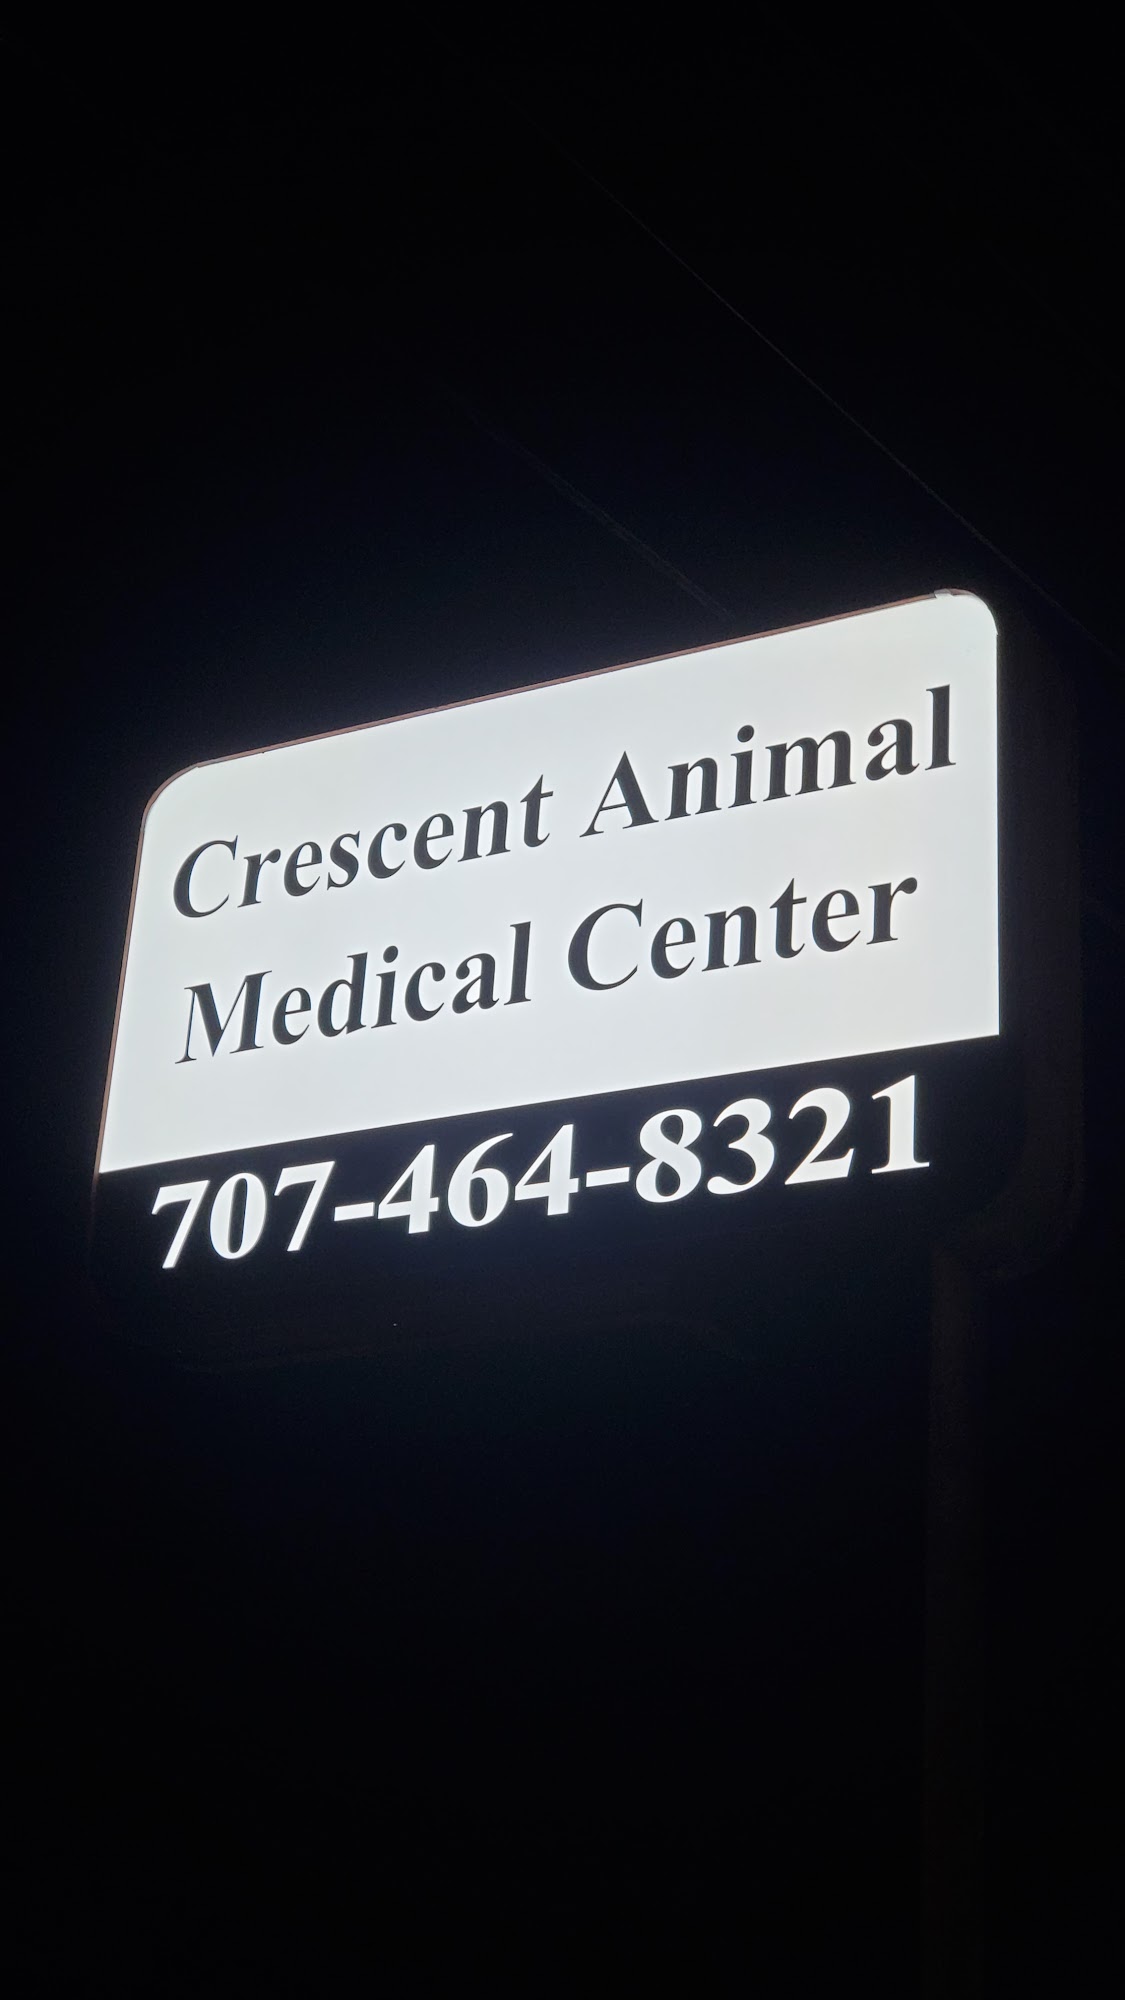 Crescent Animal Medical Center